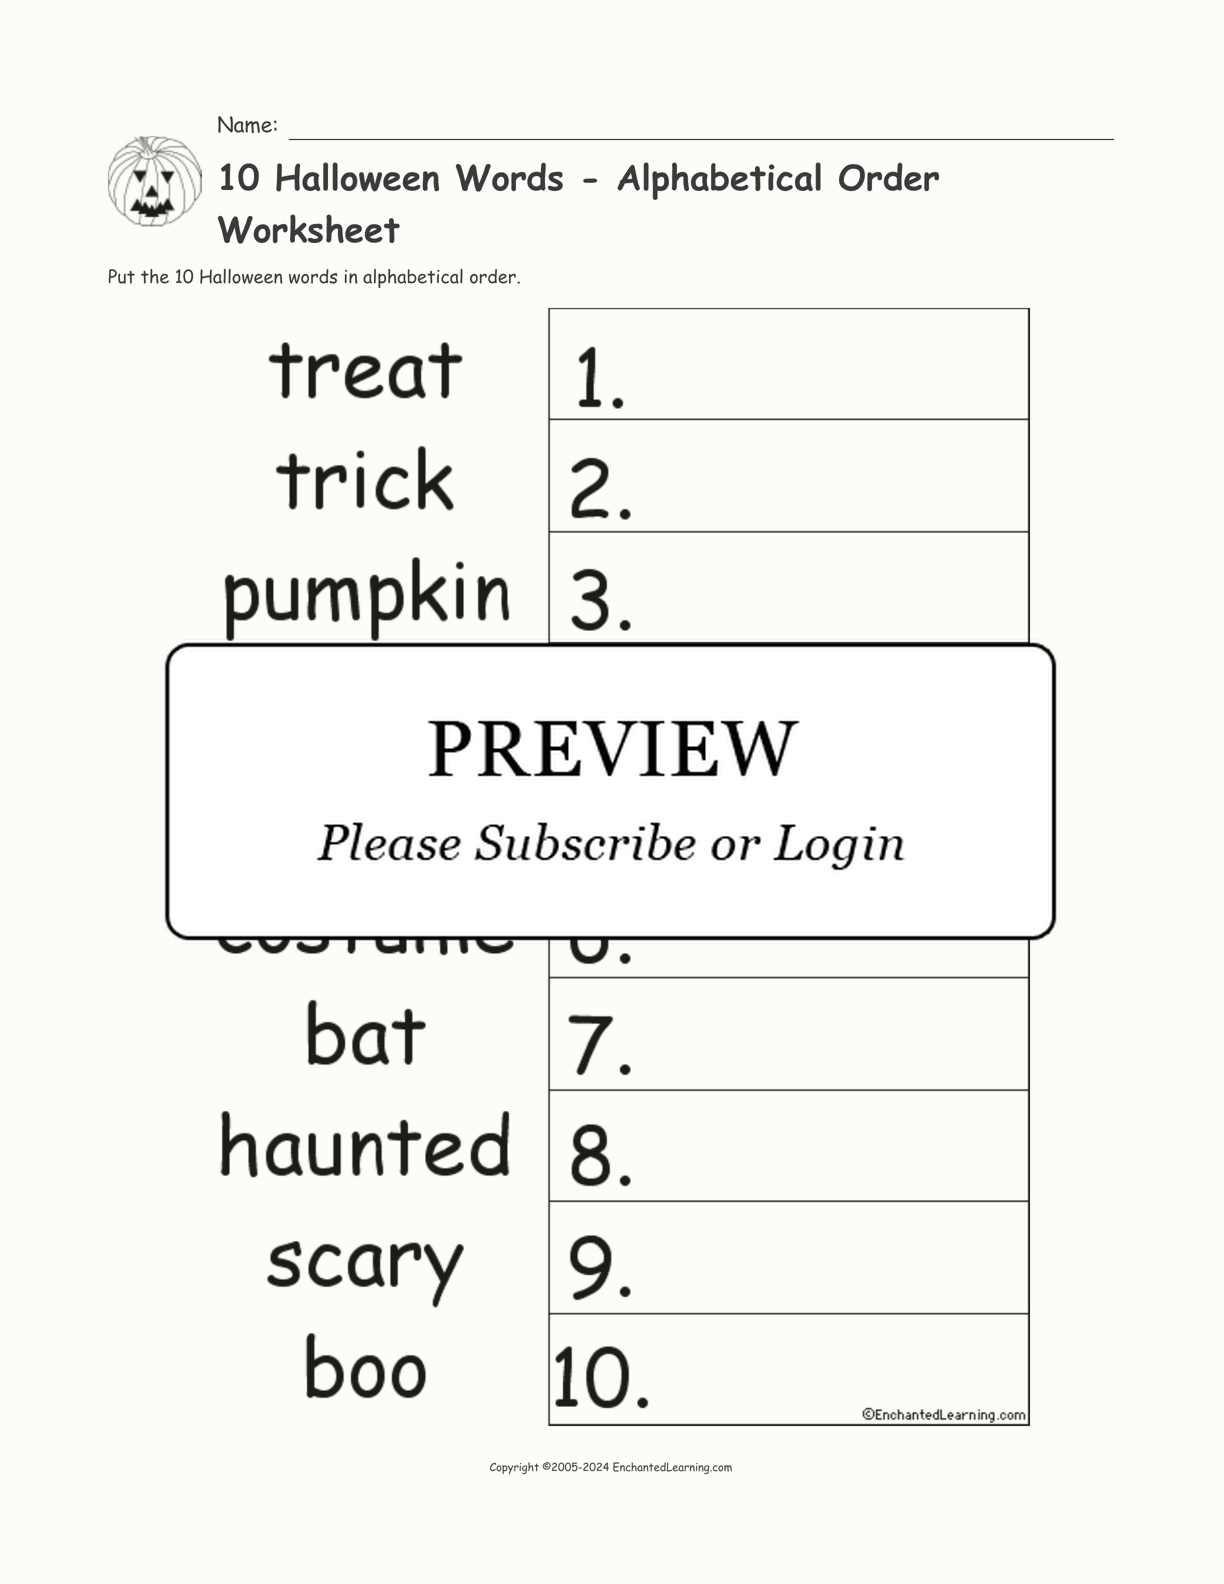 10 Halloween Words - Alphabetical Order Worksheet interactive worksheet page 1